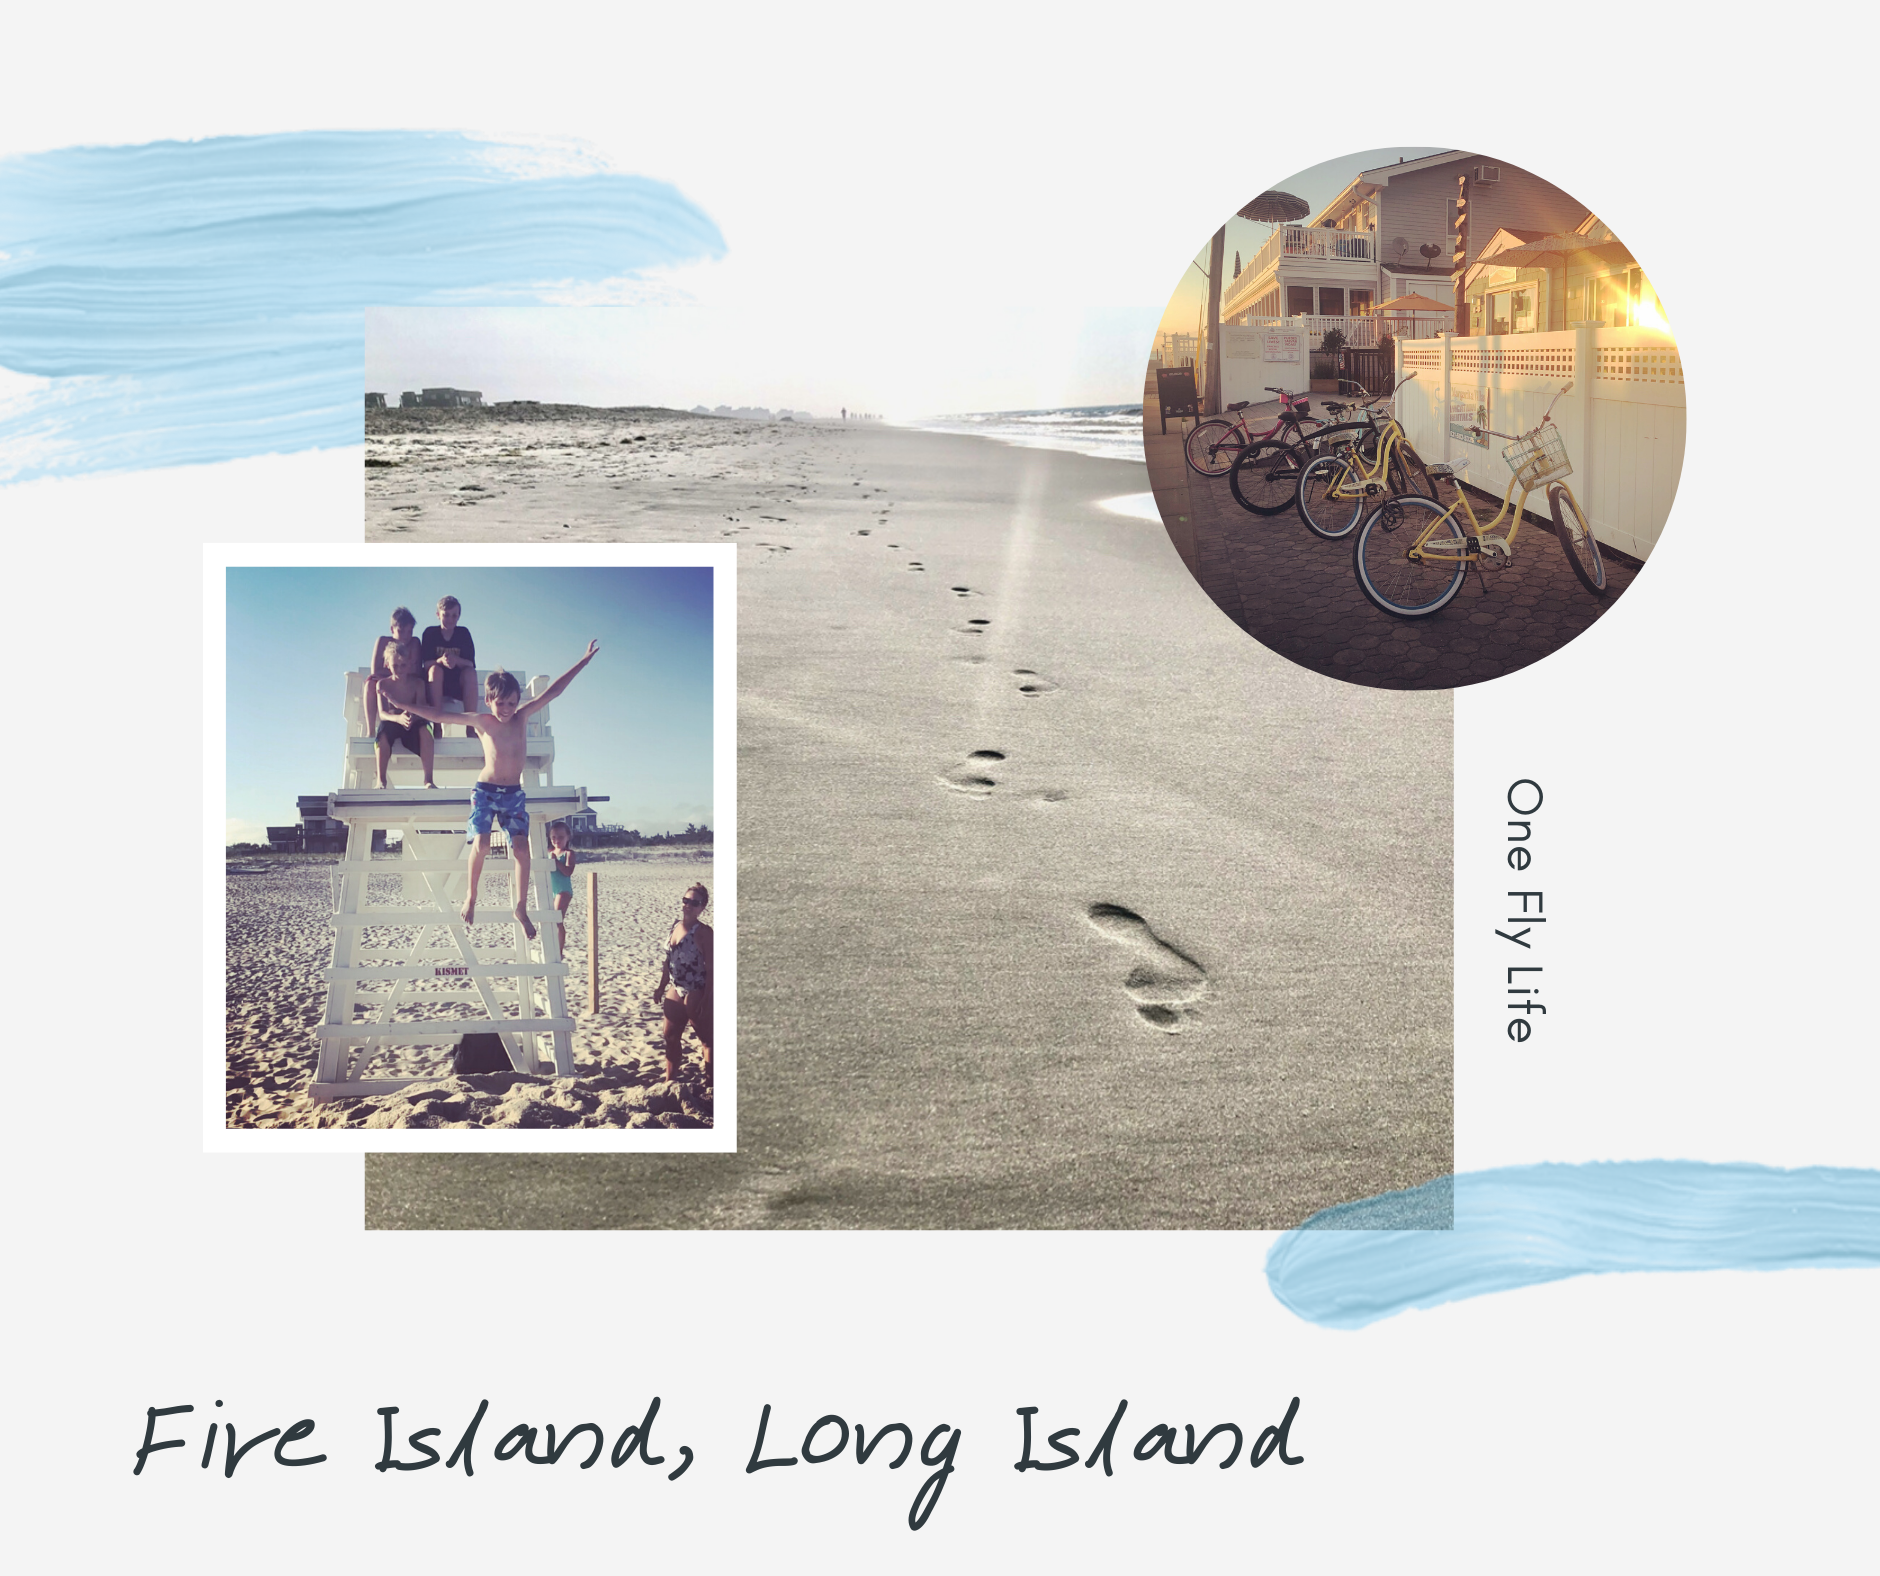 Fire Island, Long Island